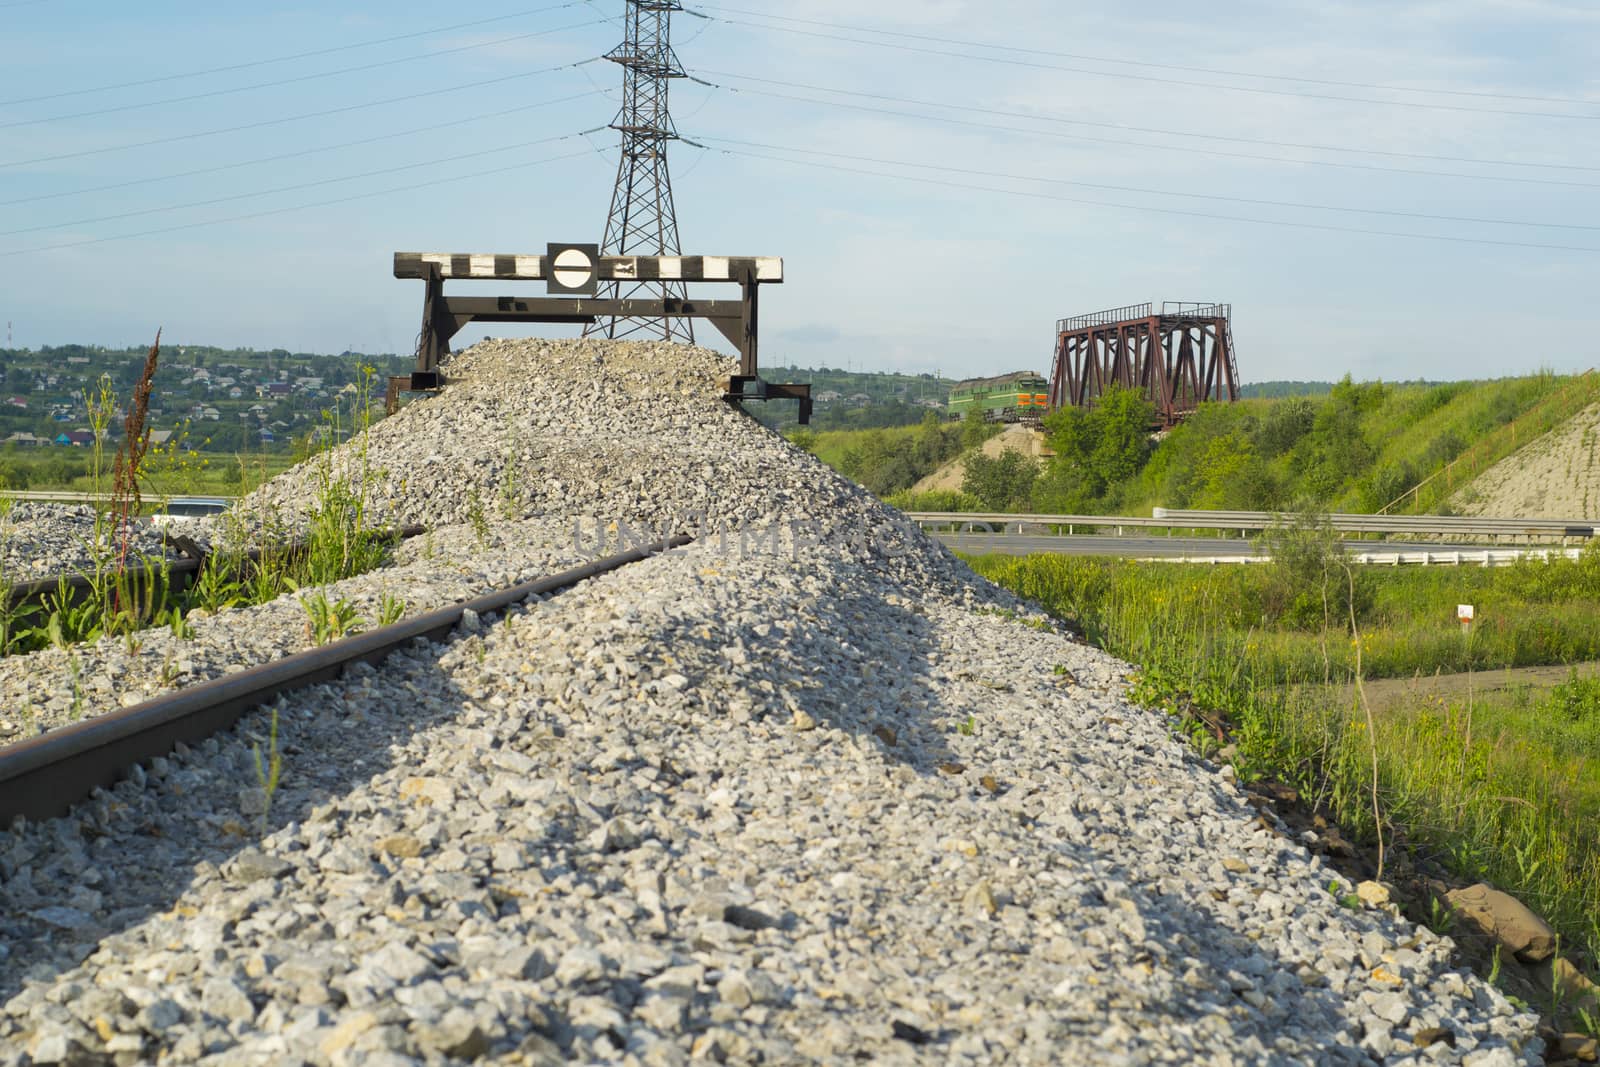 Railway impasse on the railroad tracks. View of the bridge with a railway locomotive